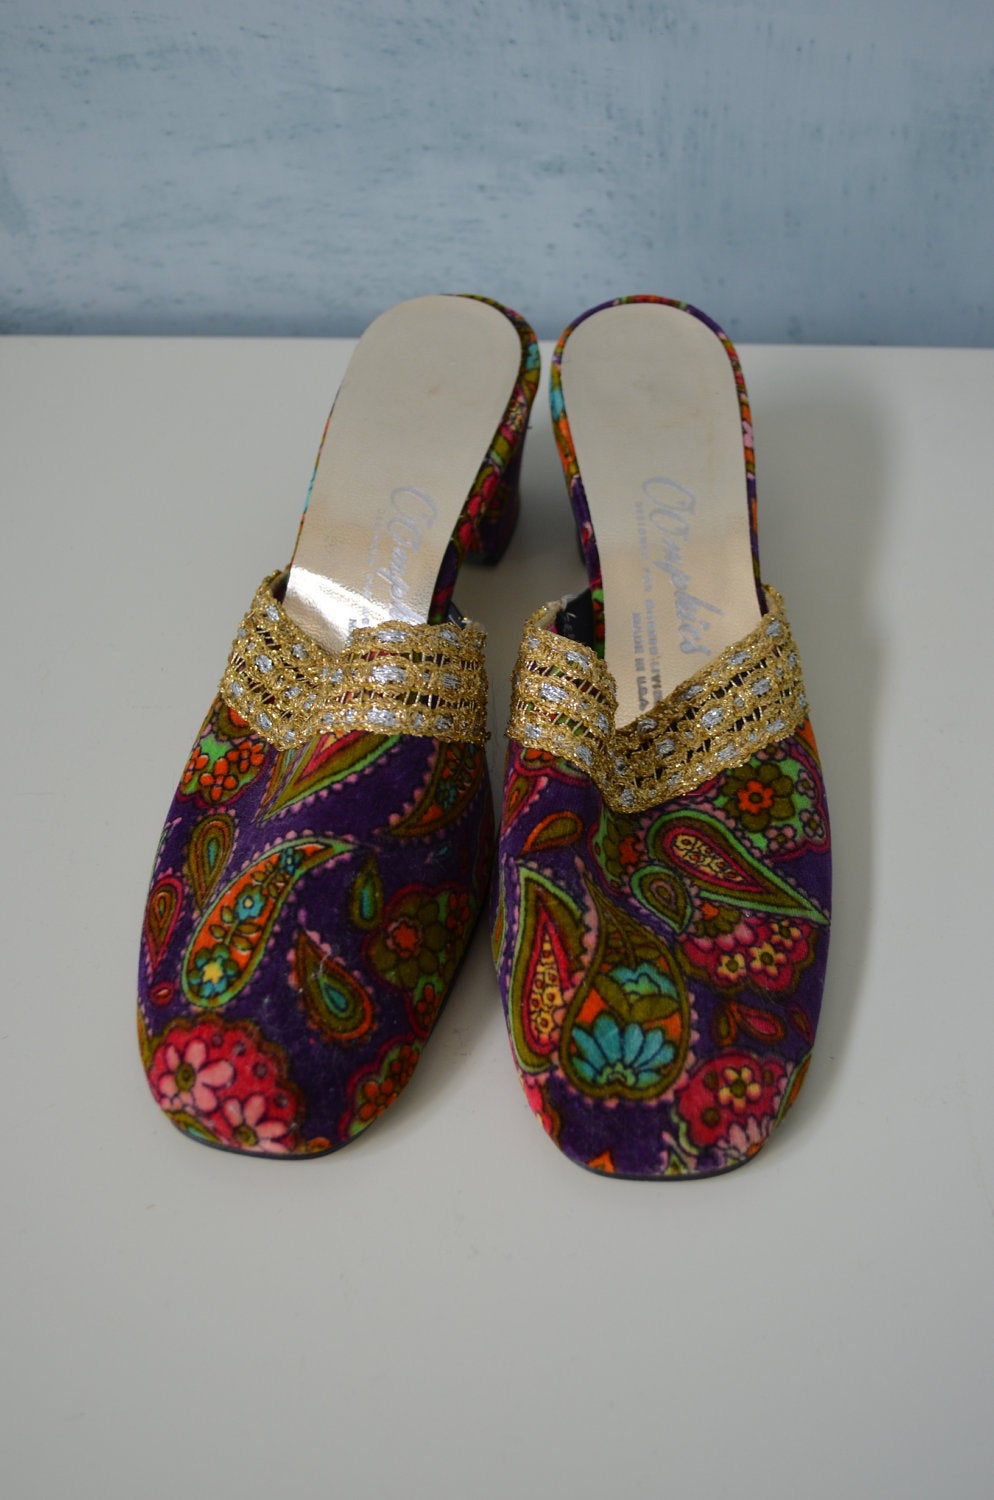 70's Mule Bohemian Oomphies Pasley Colorful Velvet Mule Shoes